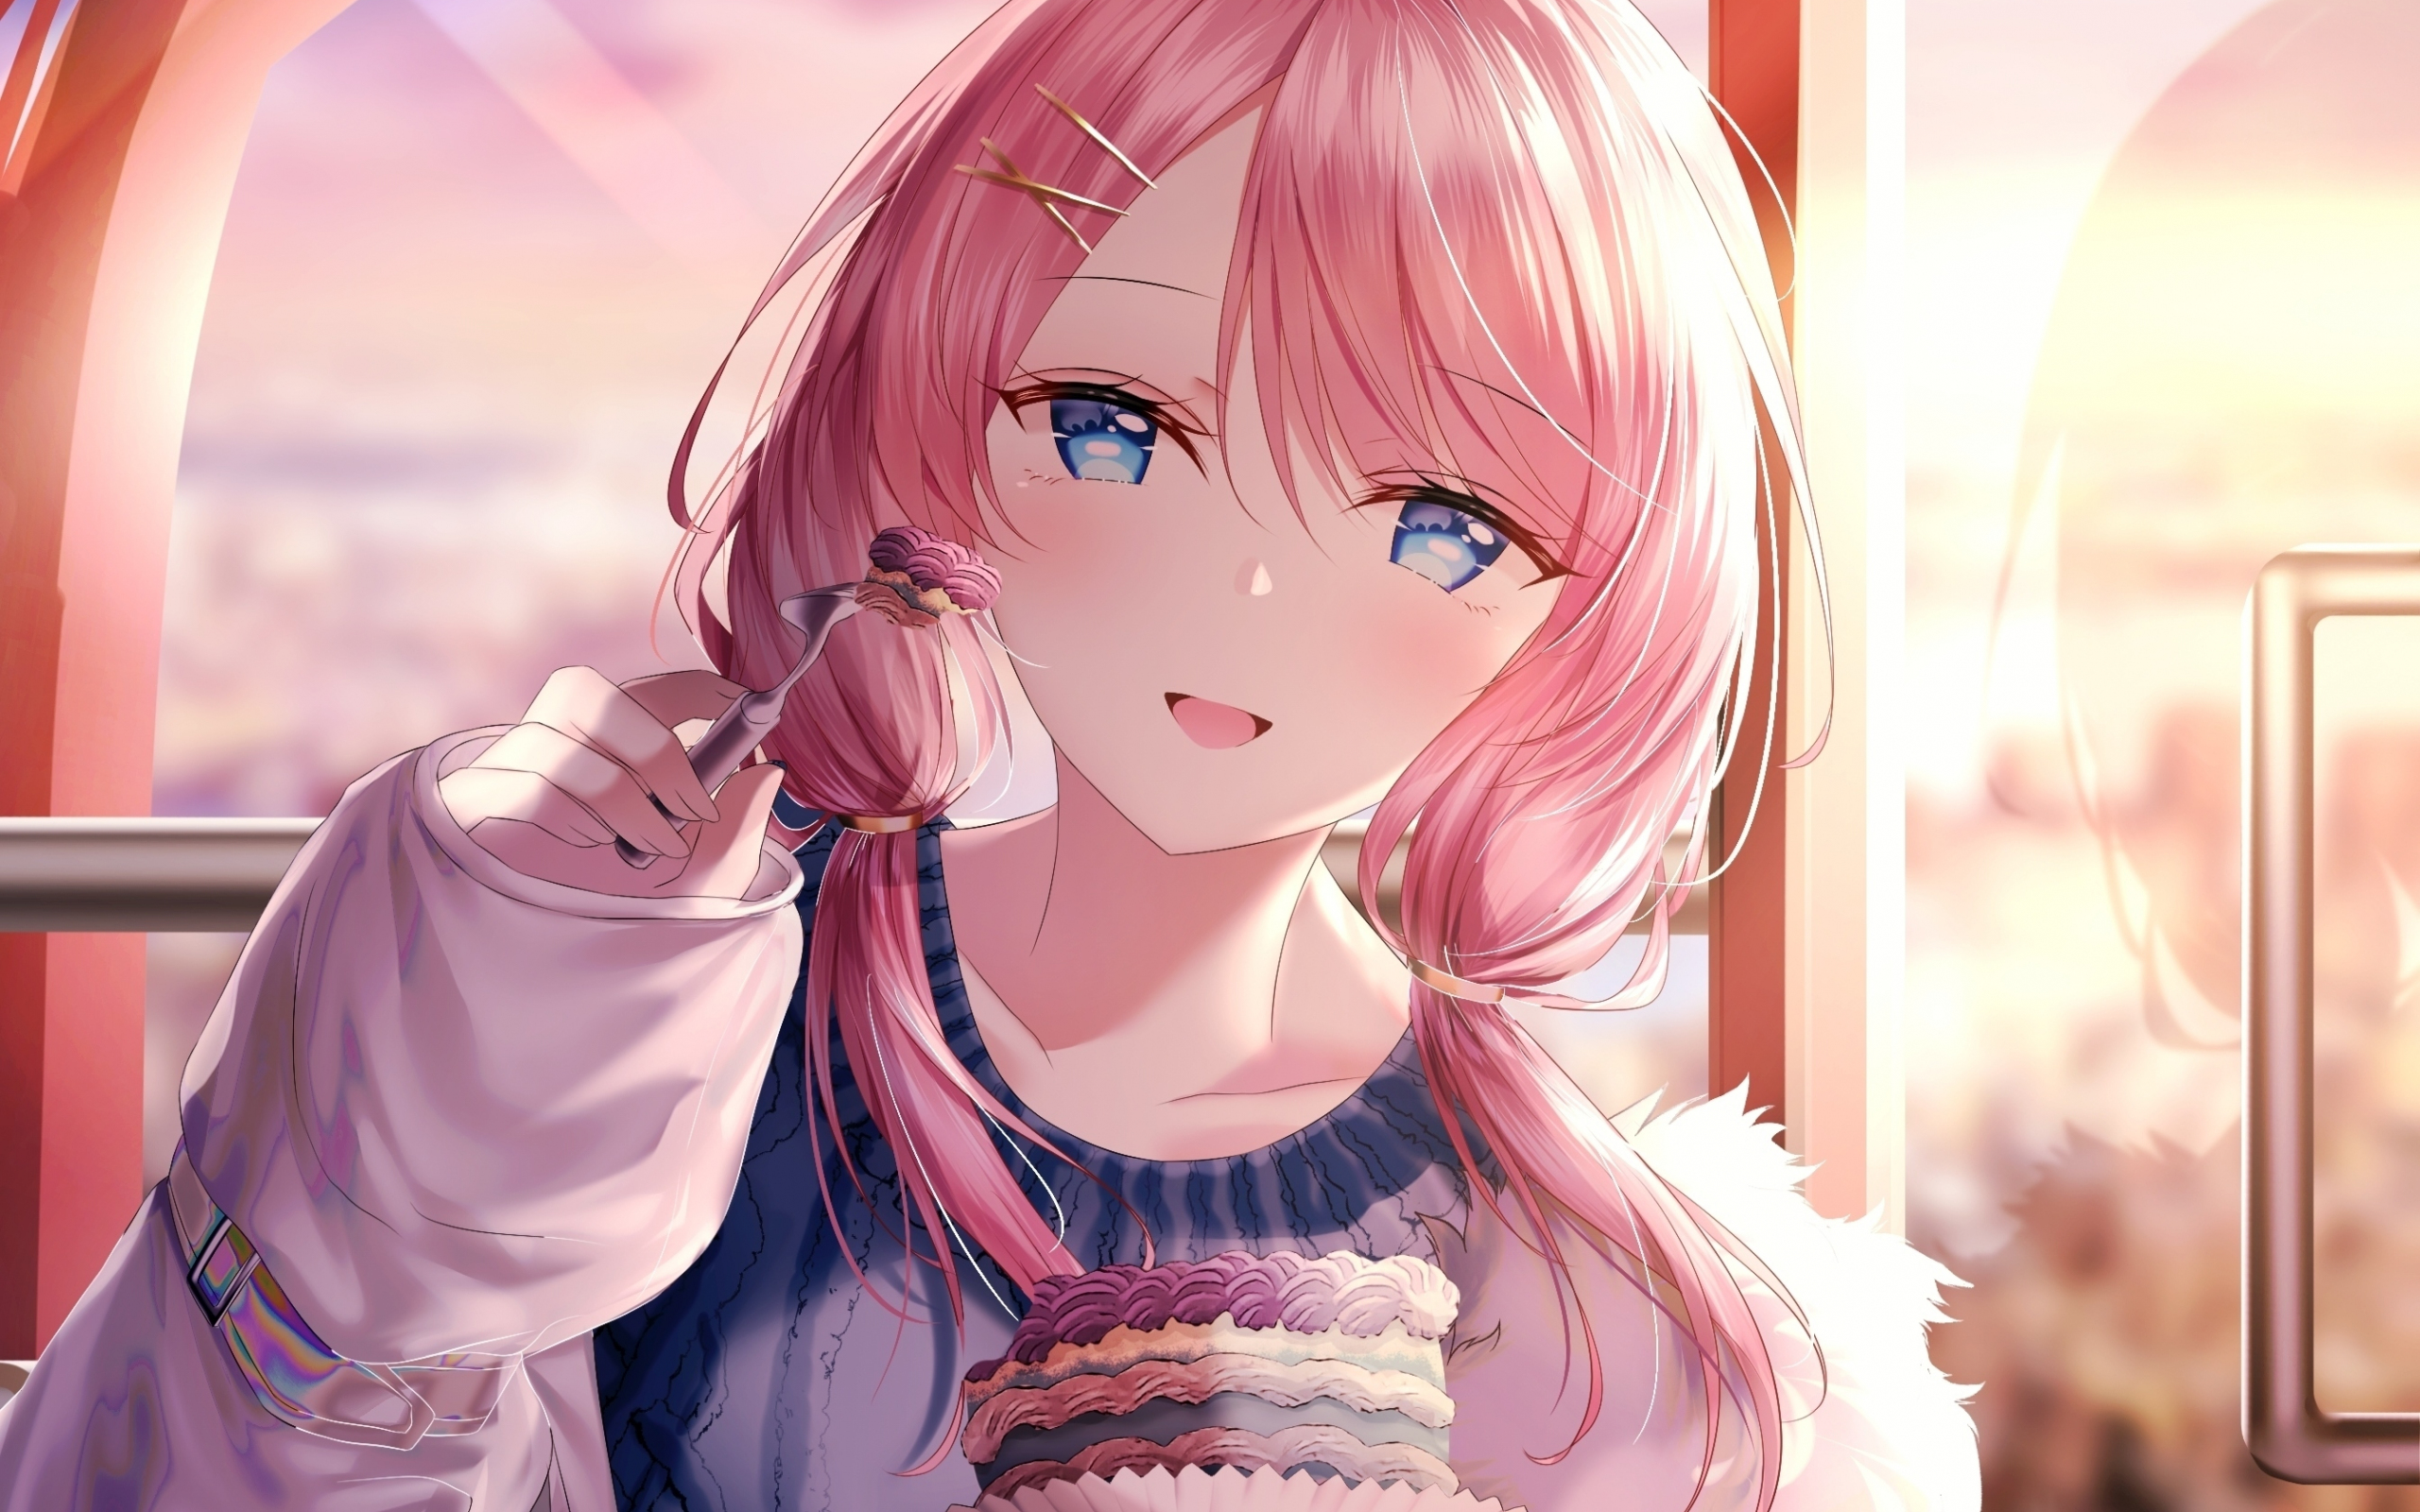 Download wallpaper 2560x1600 cute, anime girl, beautiful, eating cake, dual  wide 16:10 2560x1600 hd background, 23915